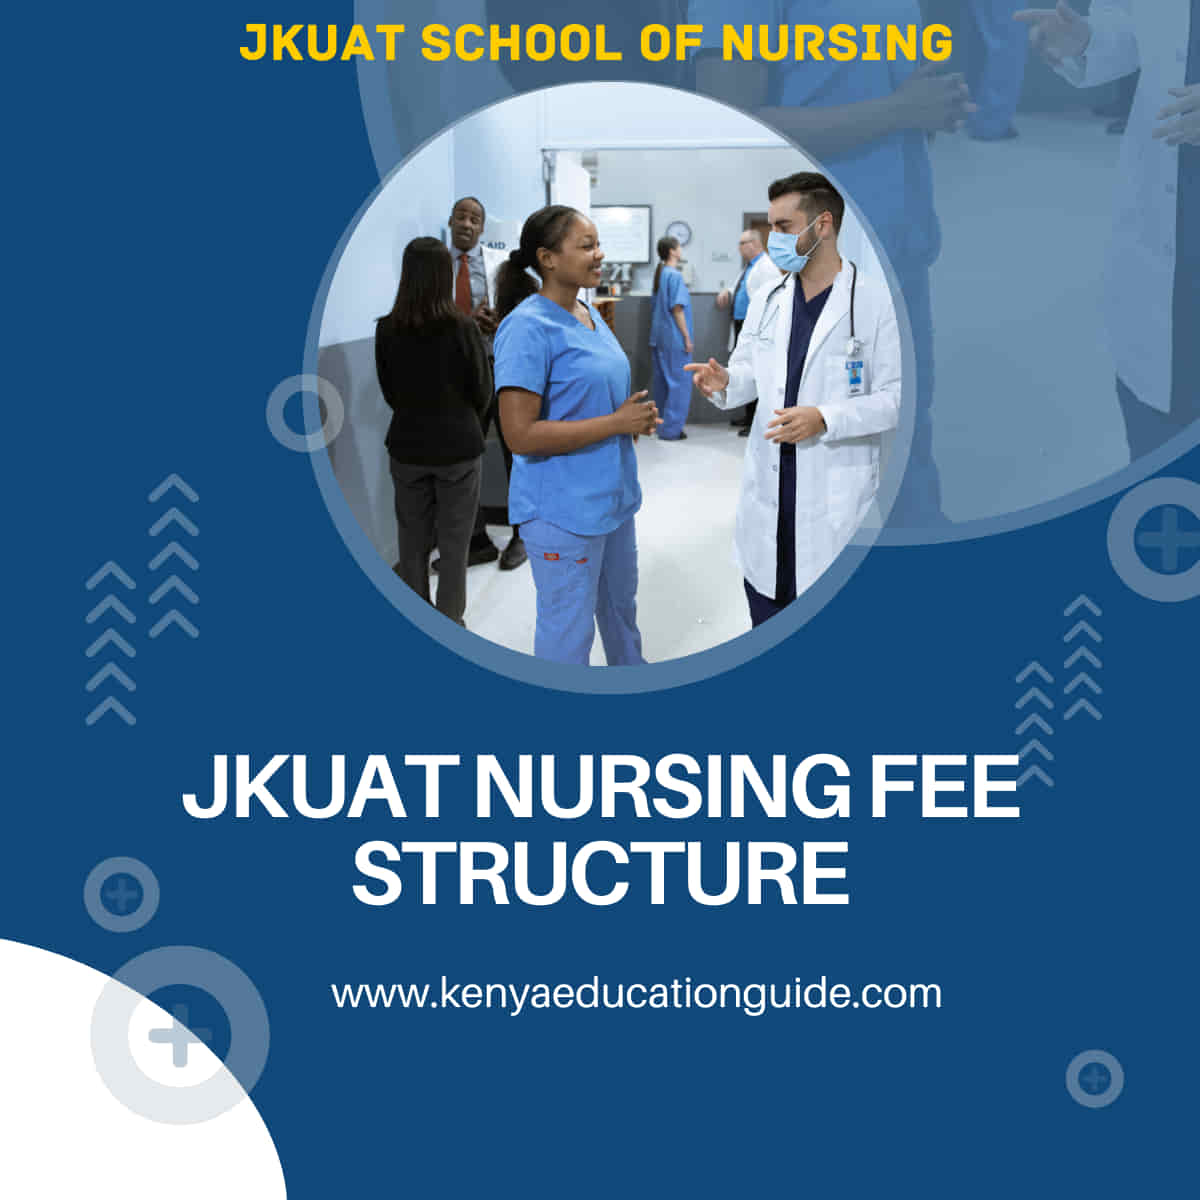 JKUAT nursing fee structure